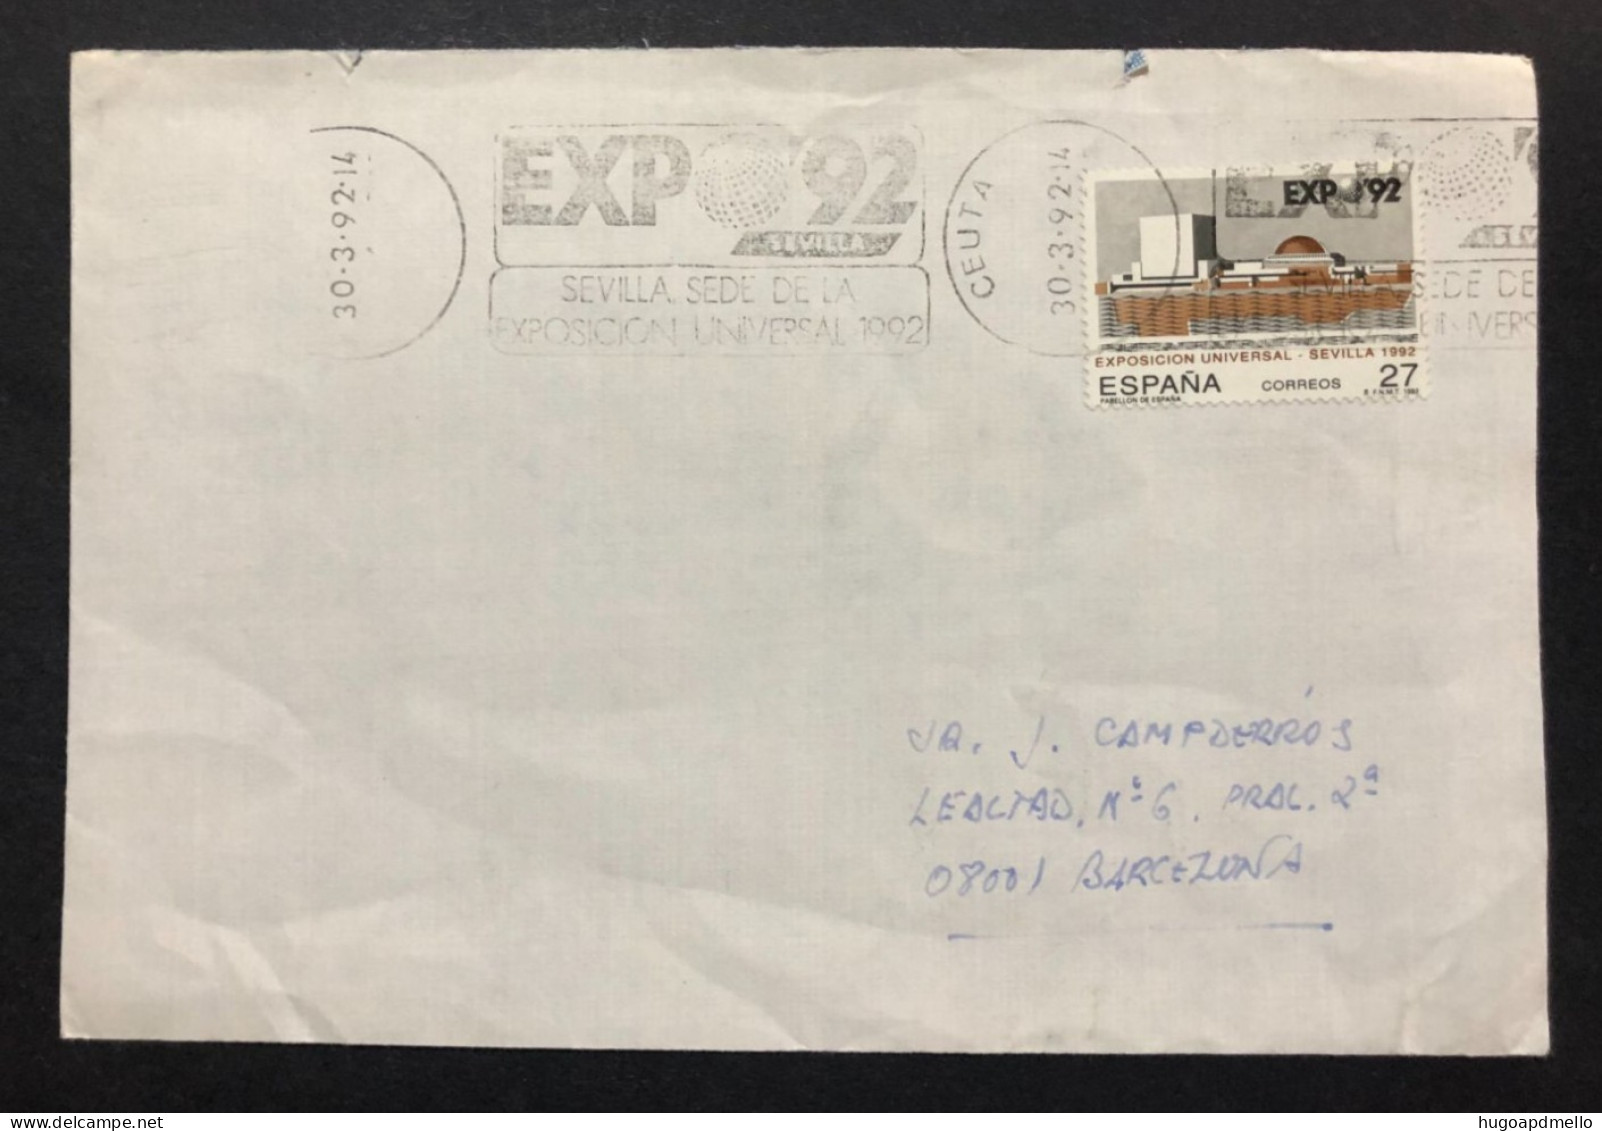 SPAIN, Cover With Special Cancellation « EXPO '92 », « CEUTA Postmark », 1992 - 1992 – Siviglia (Spagna)